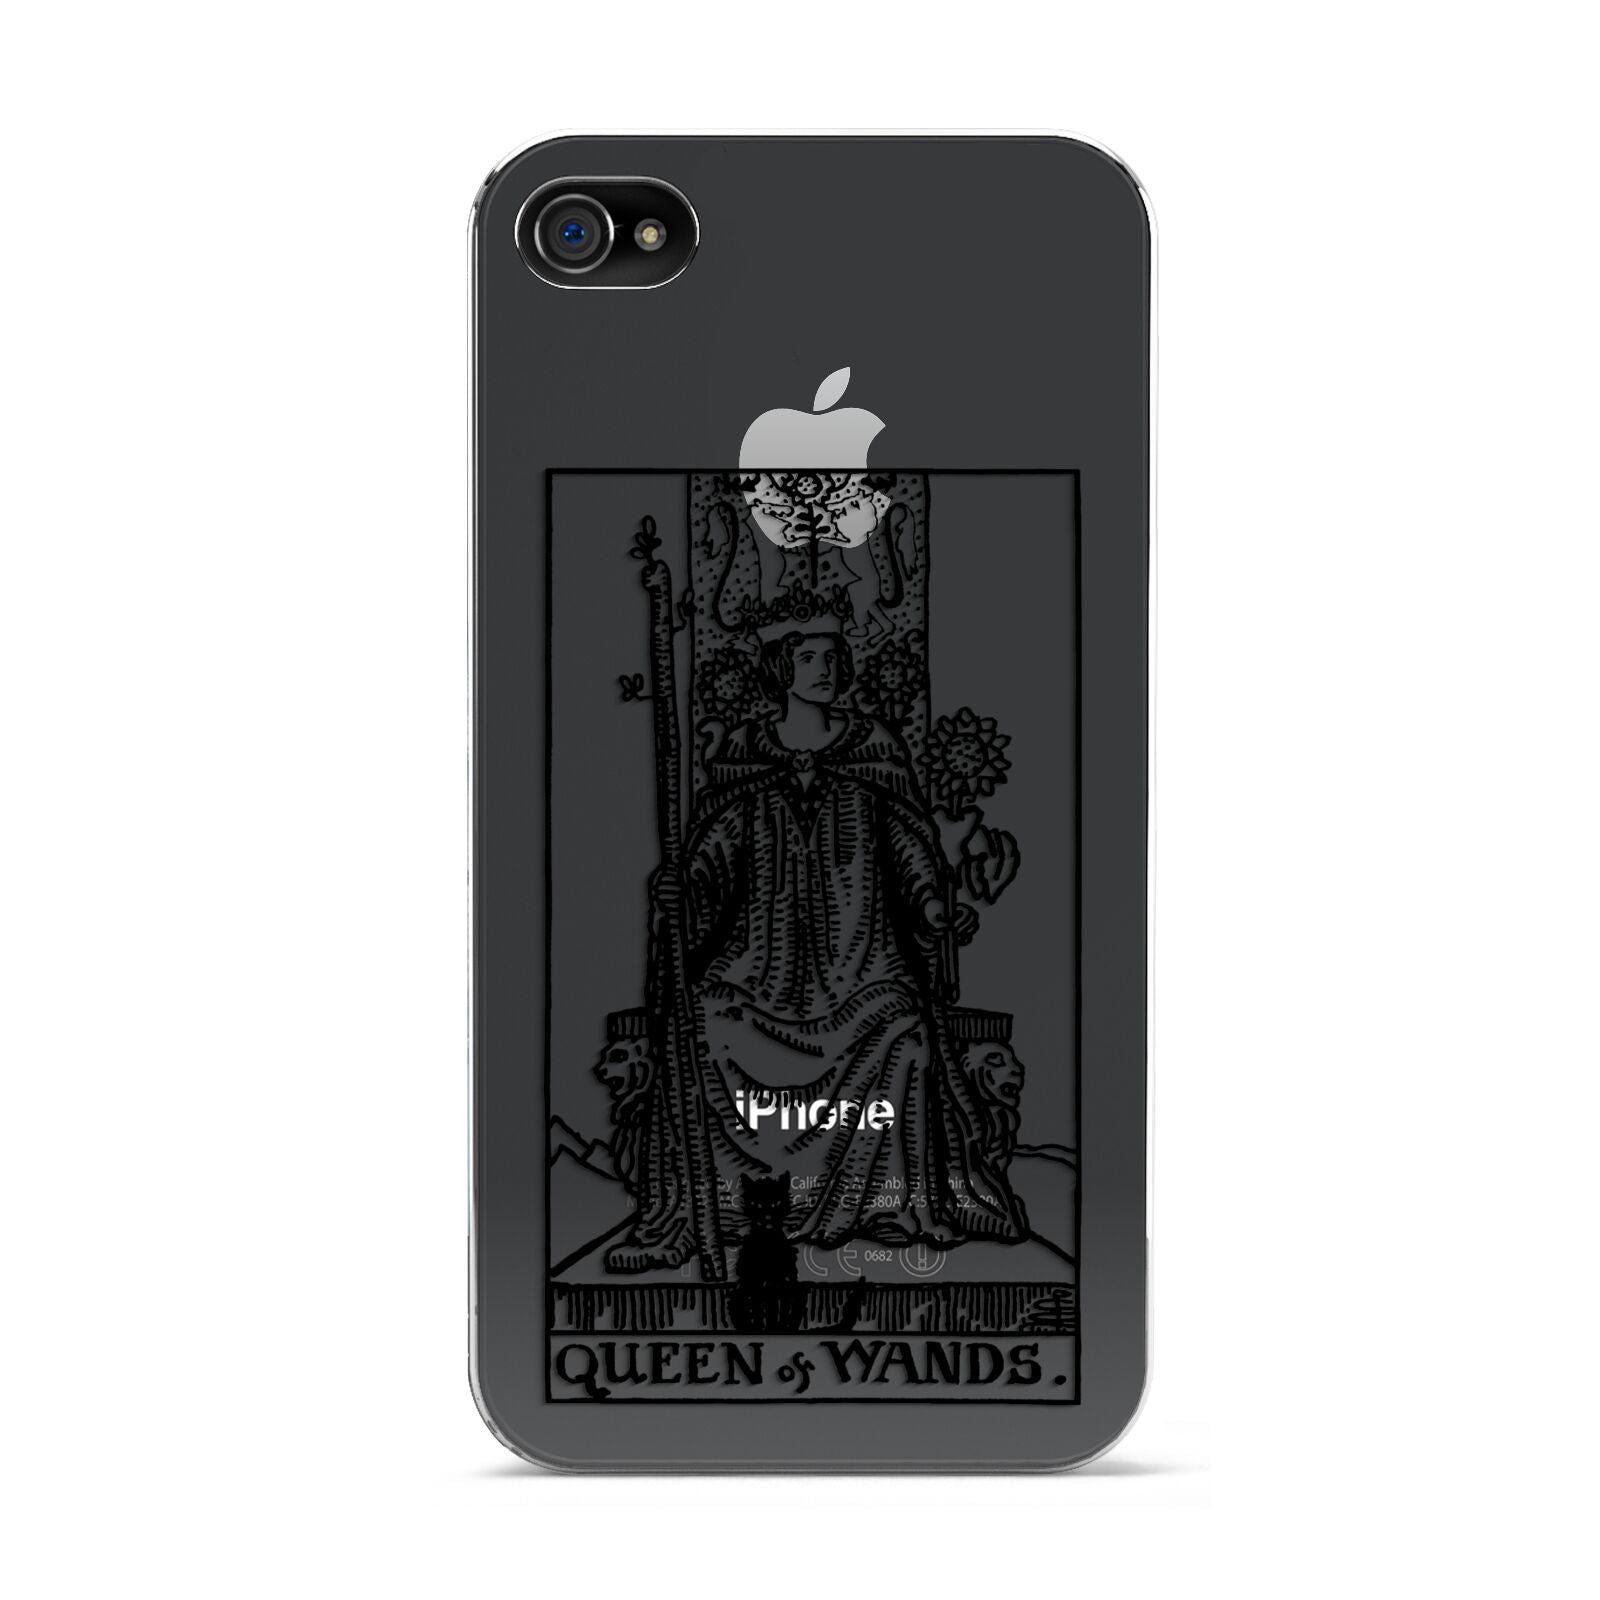 Queen of Wands Monochrome Apple iPhone 4s Case